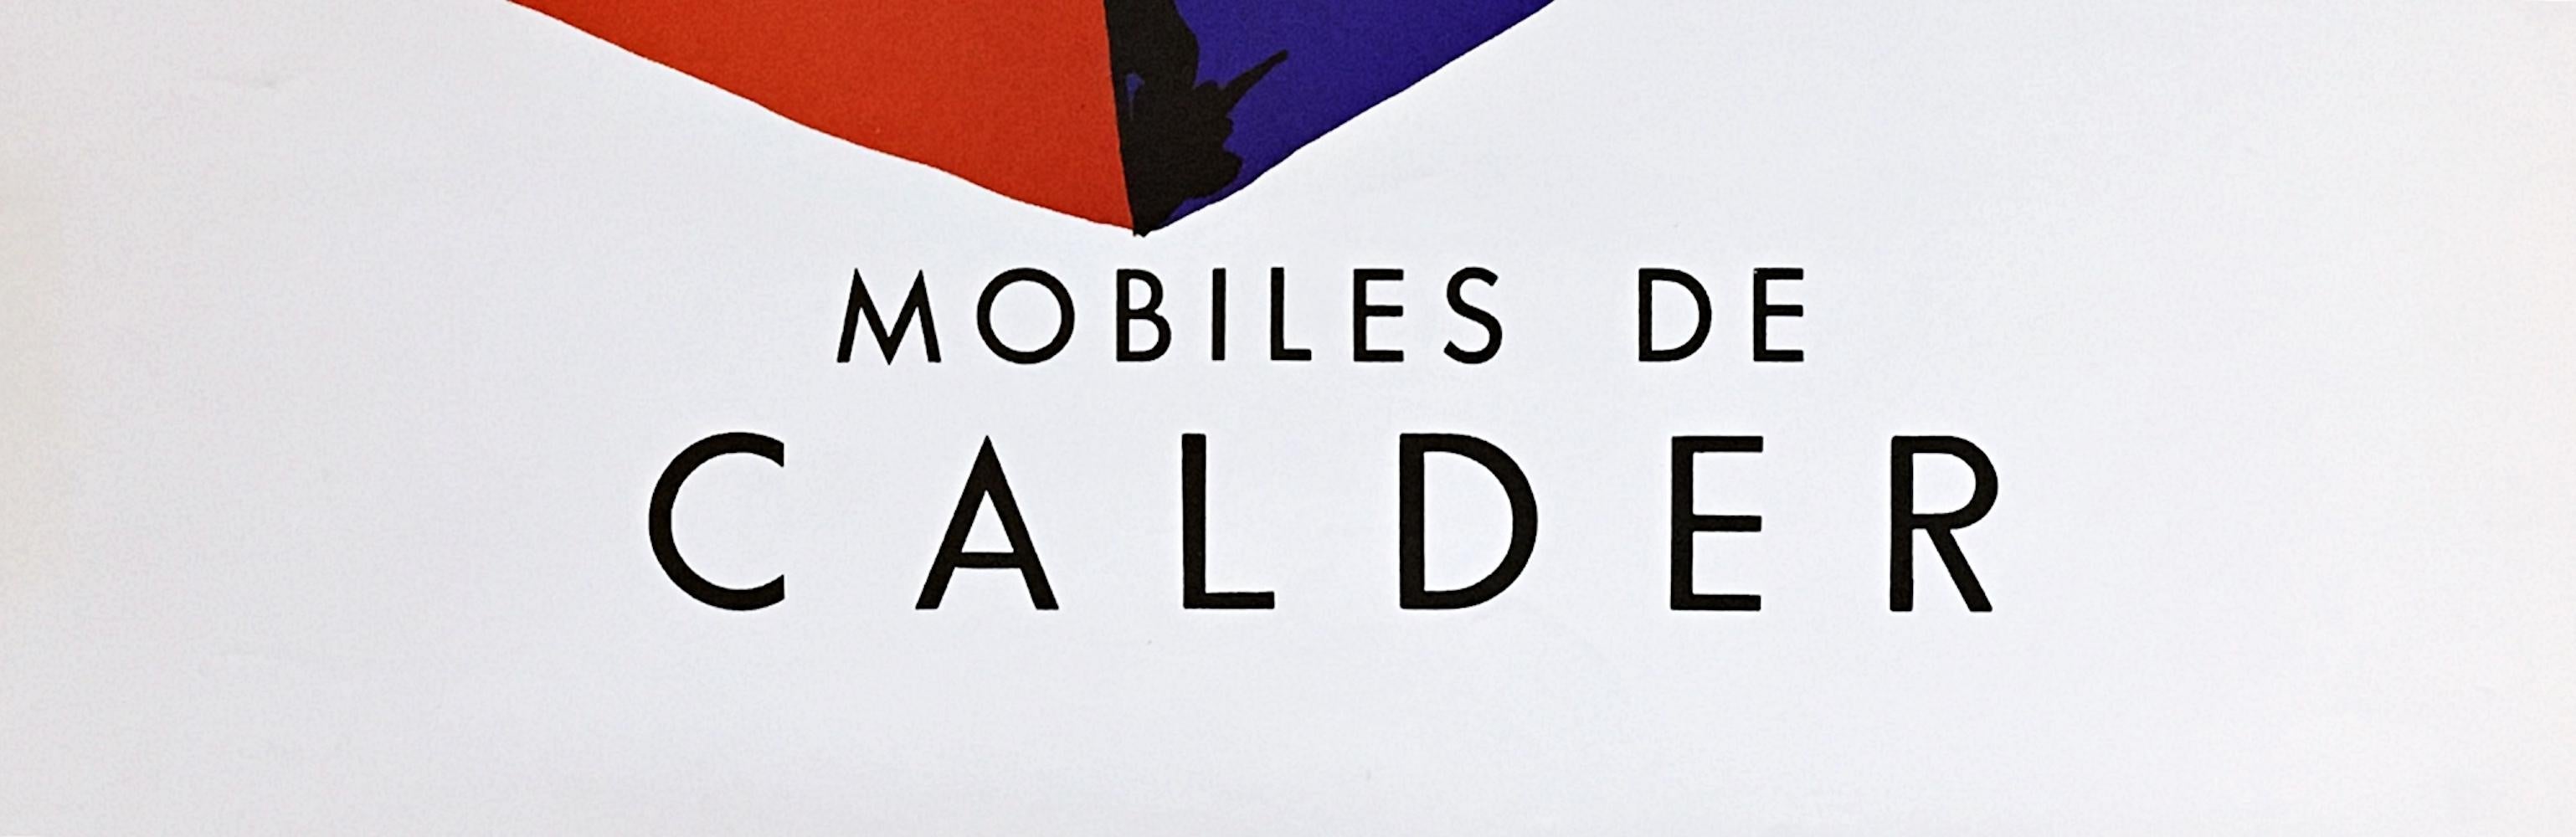 Mobiles de Calder, mid century modern Alexander Calder abstract kinetic poster For Sale 2